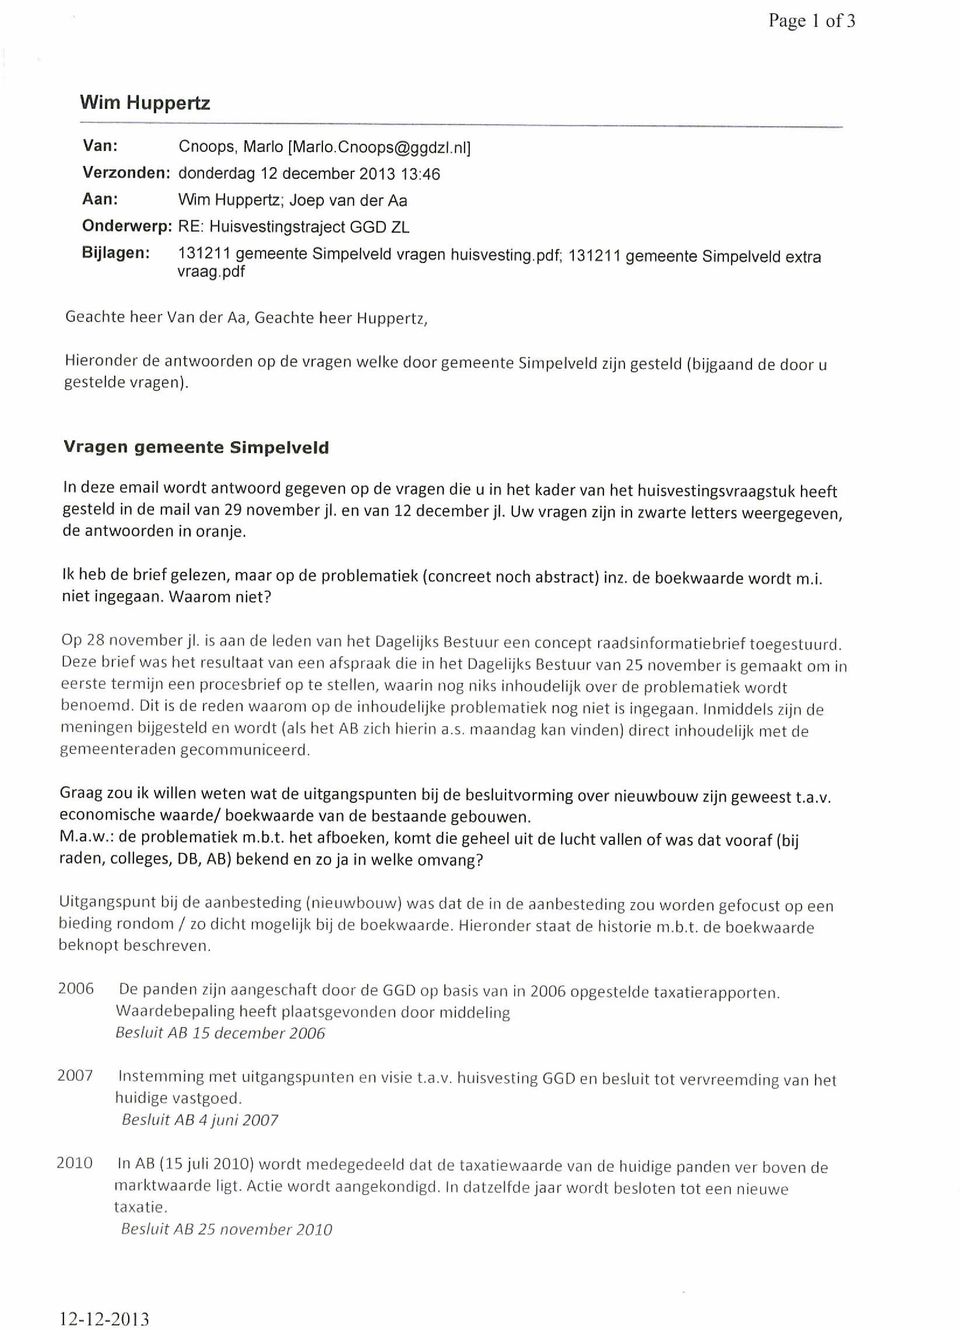 pdf; 131211 gemeente Simpelveld extra vraag.